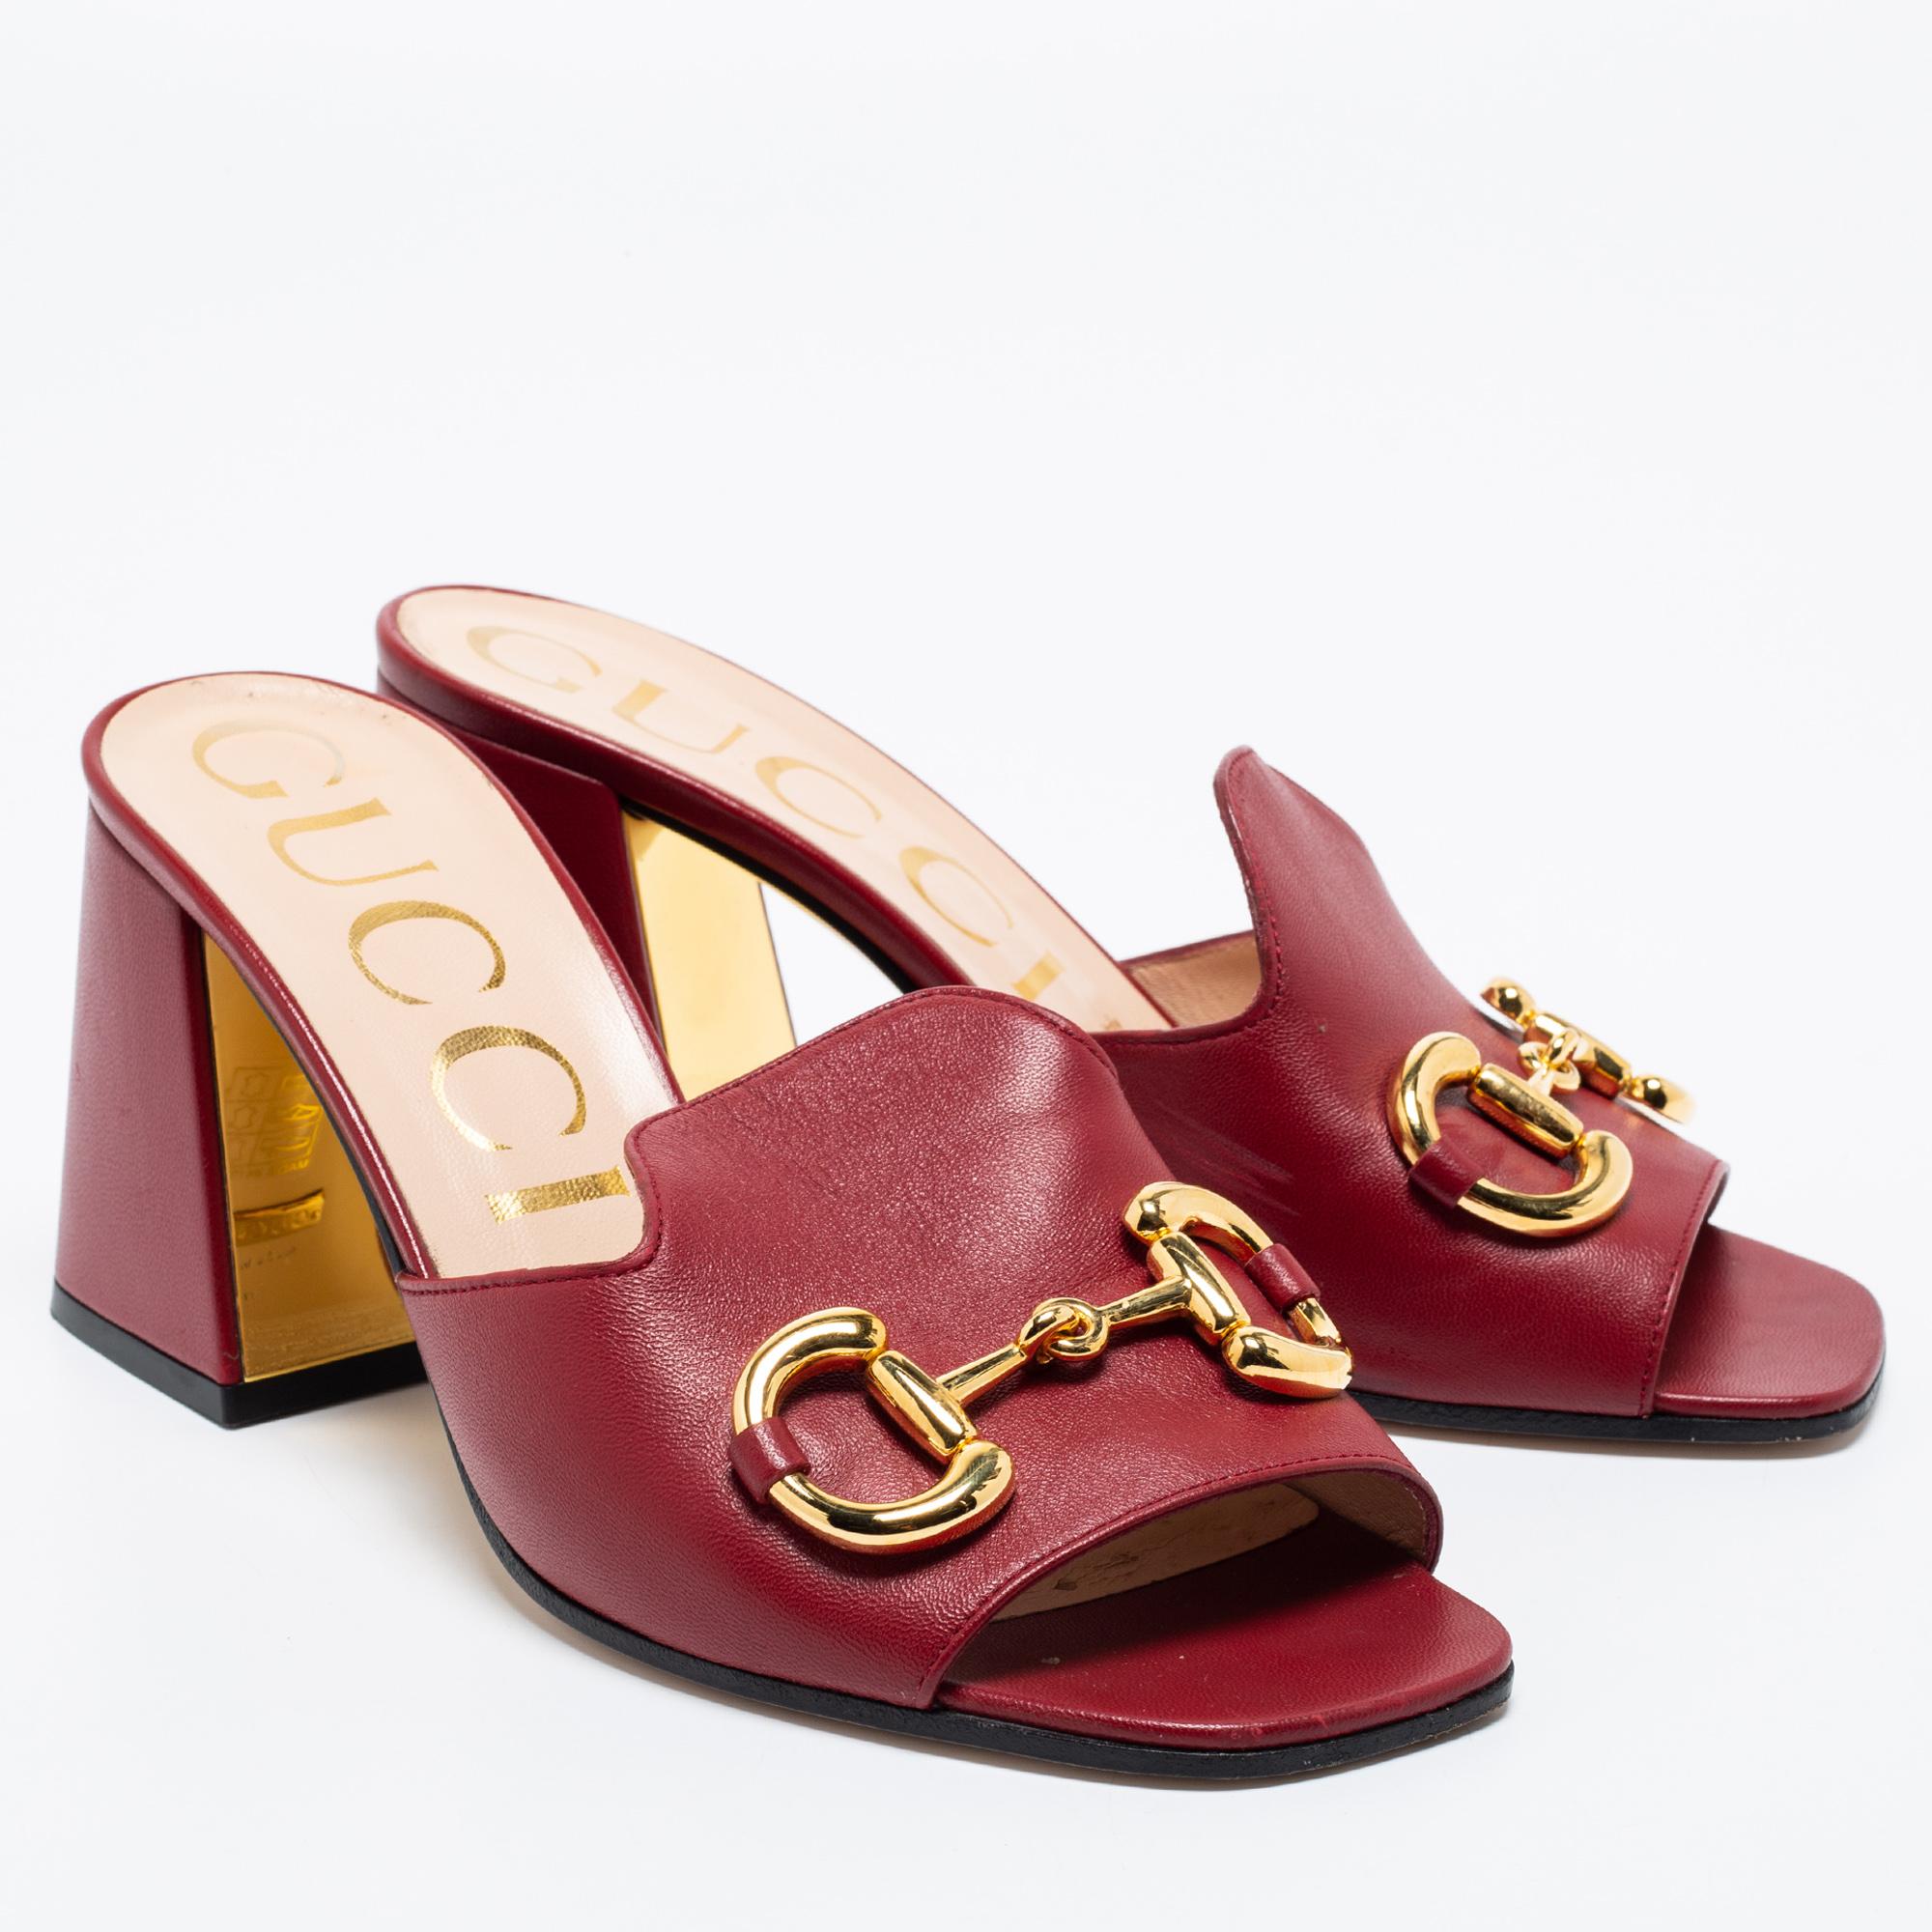 Gucci Burgundy Leather Horsebit Slide Sandals Size 38 3